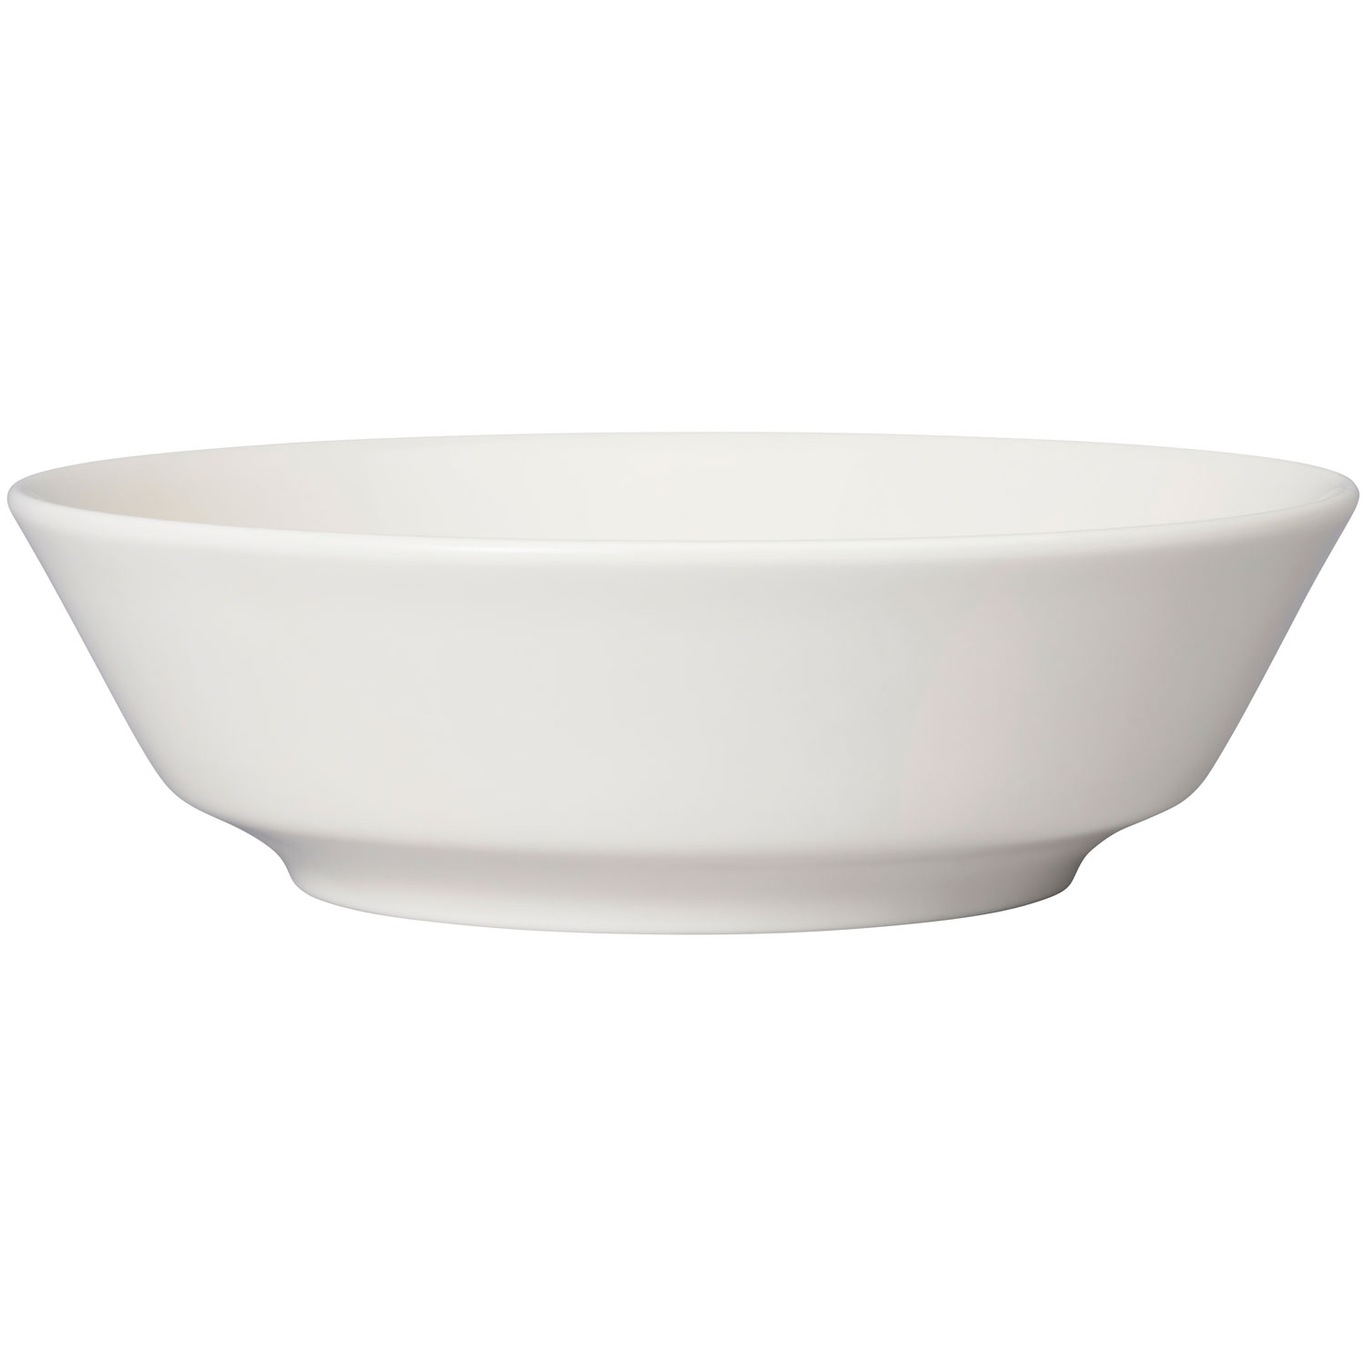 Mainio Bowl White, 17 cm